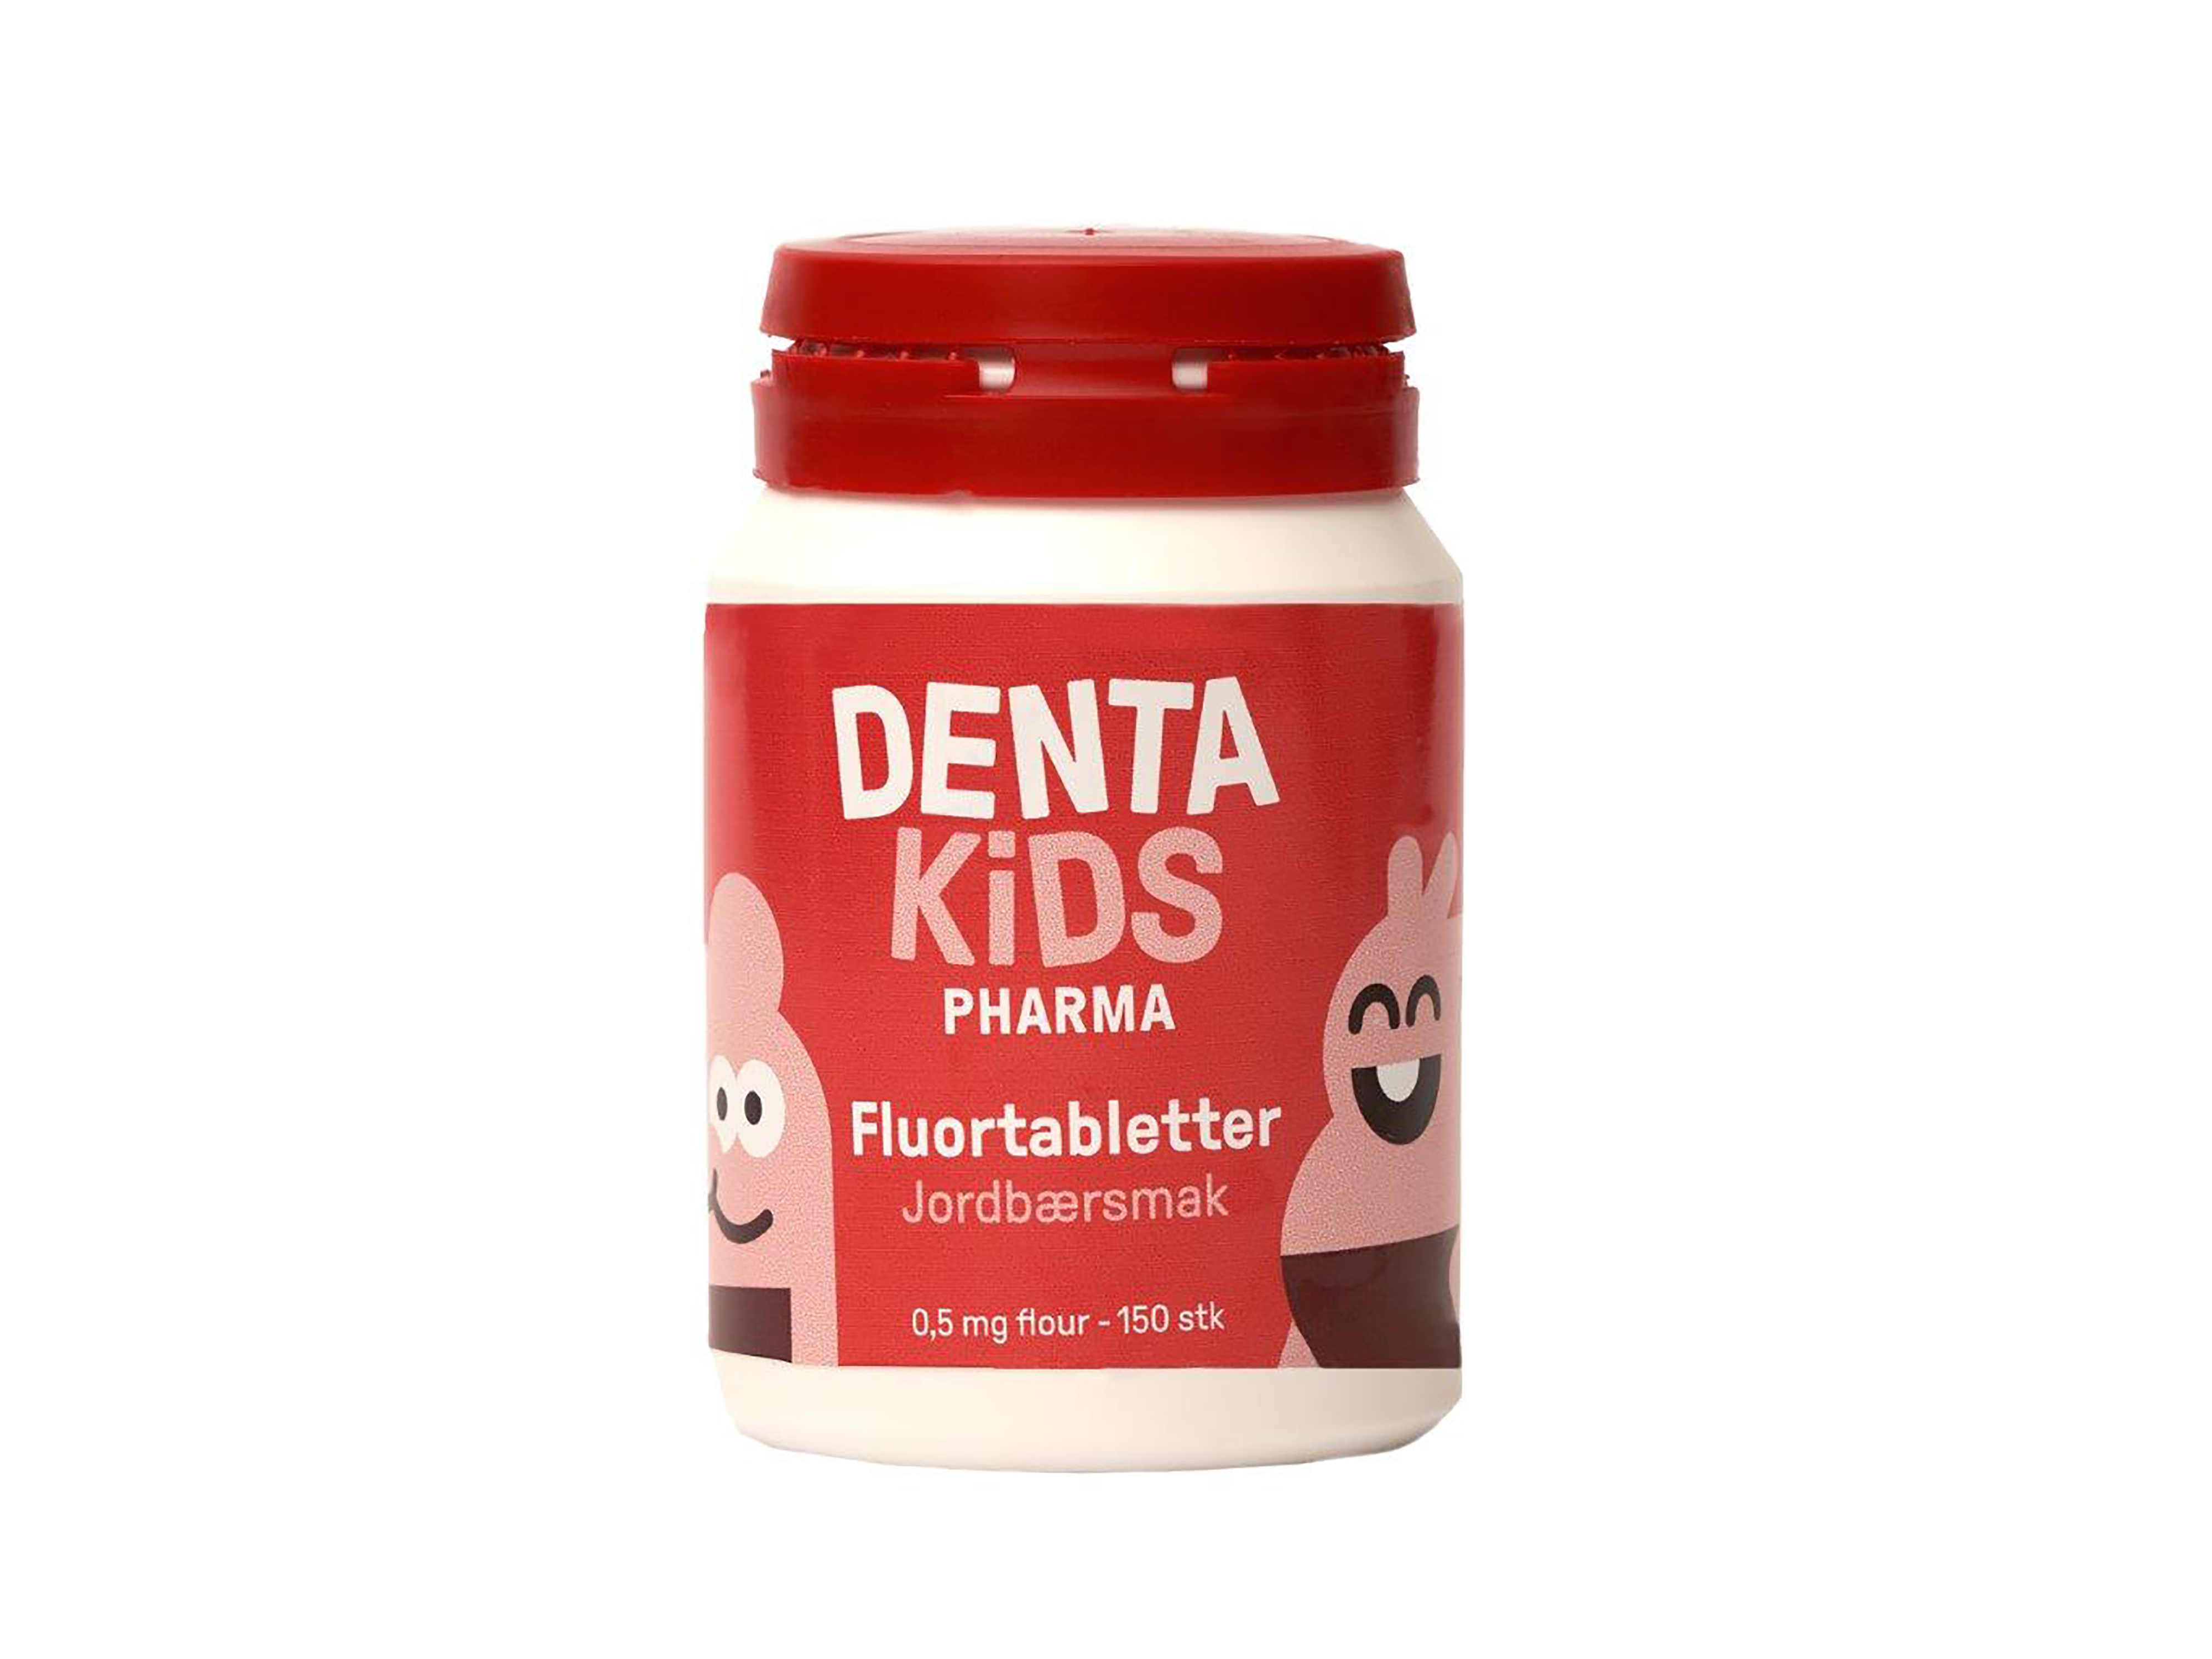 Dentakids Pharma Fluortabletter, Jordbærsmak, 150 stk.